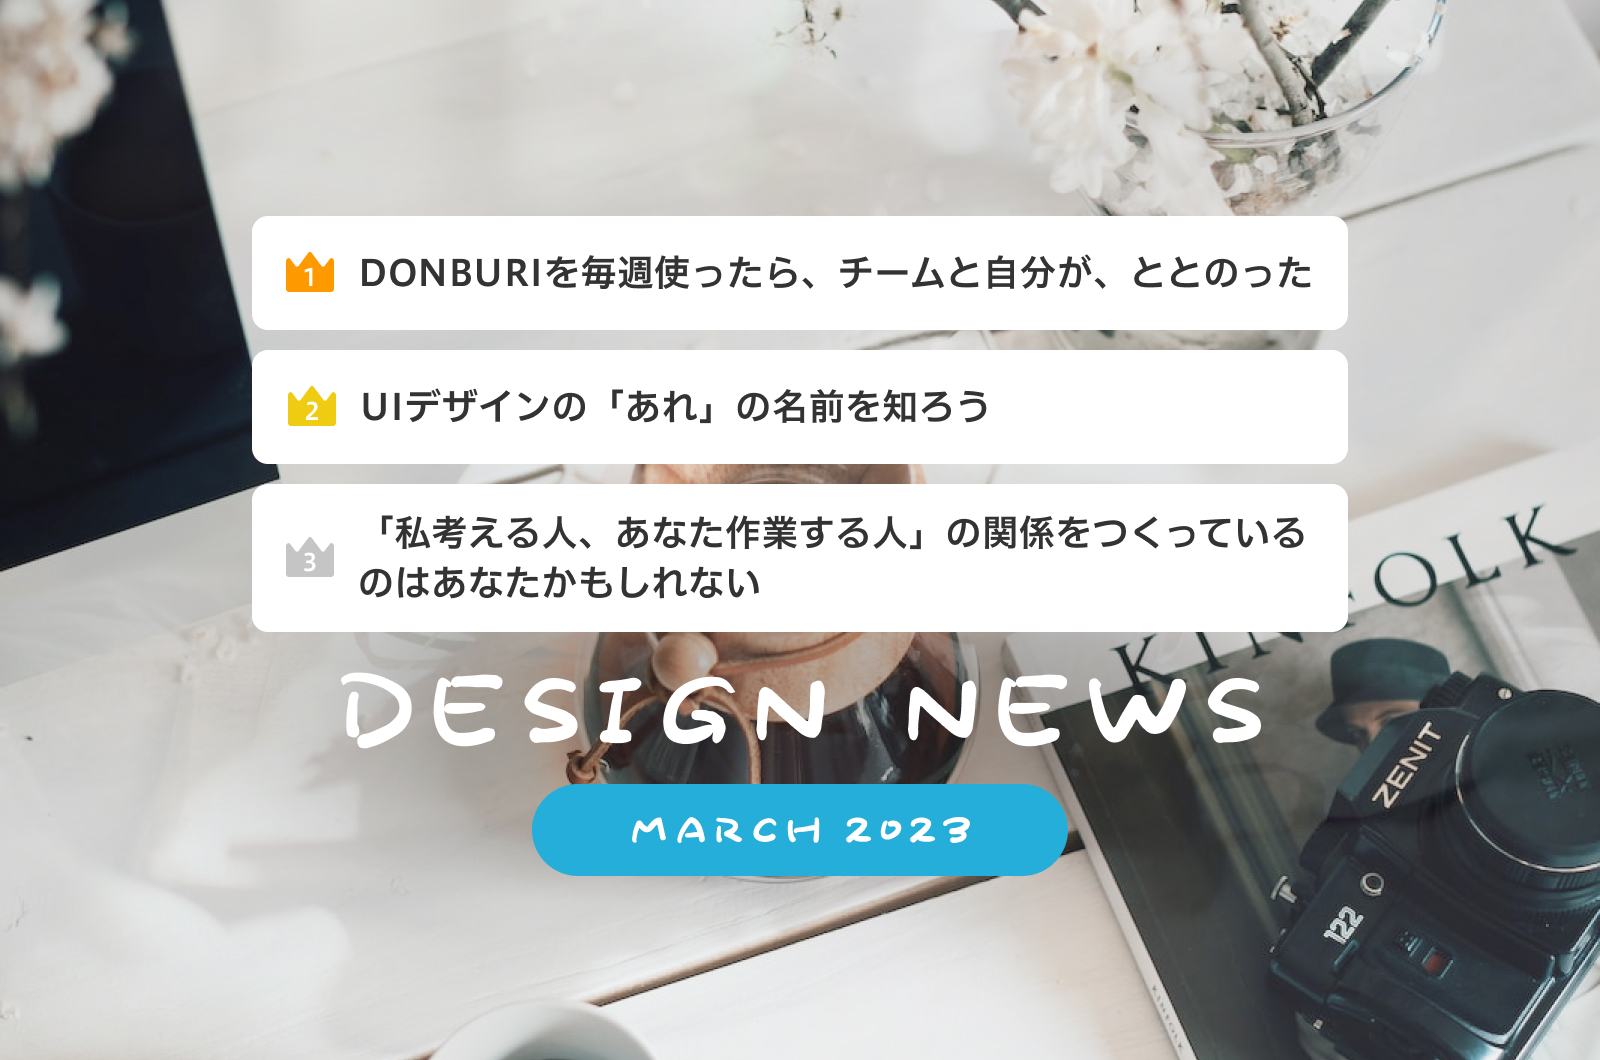 Design News (March 2023)